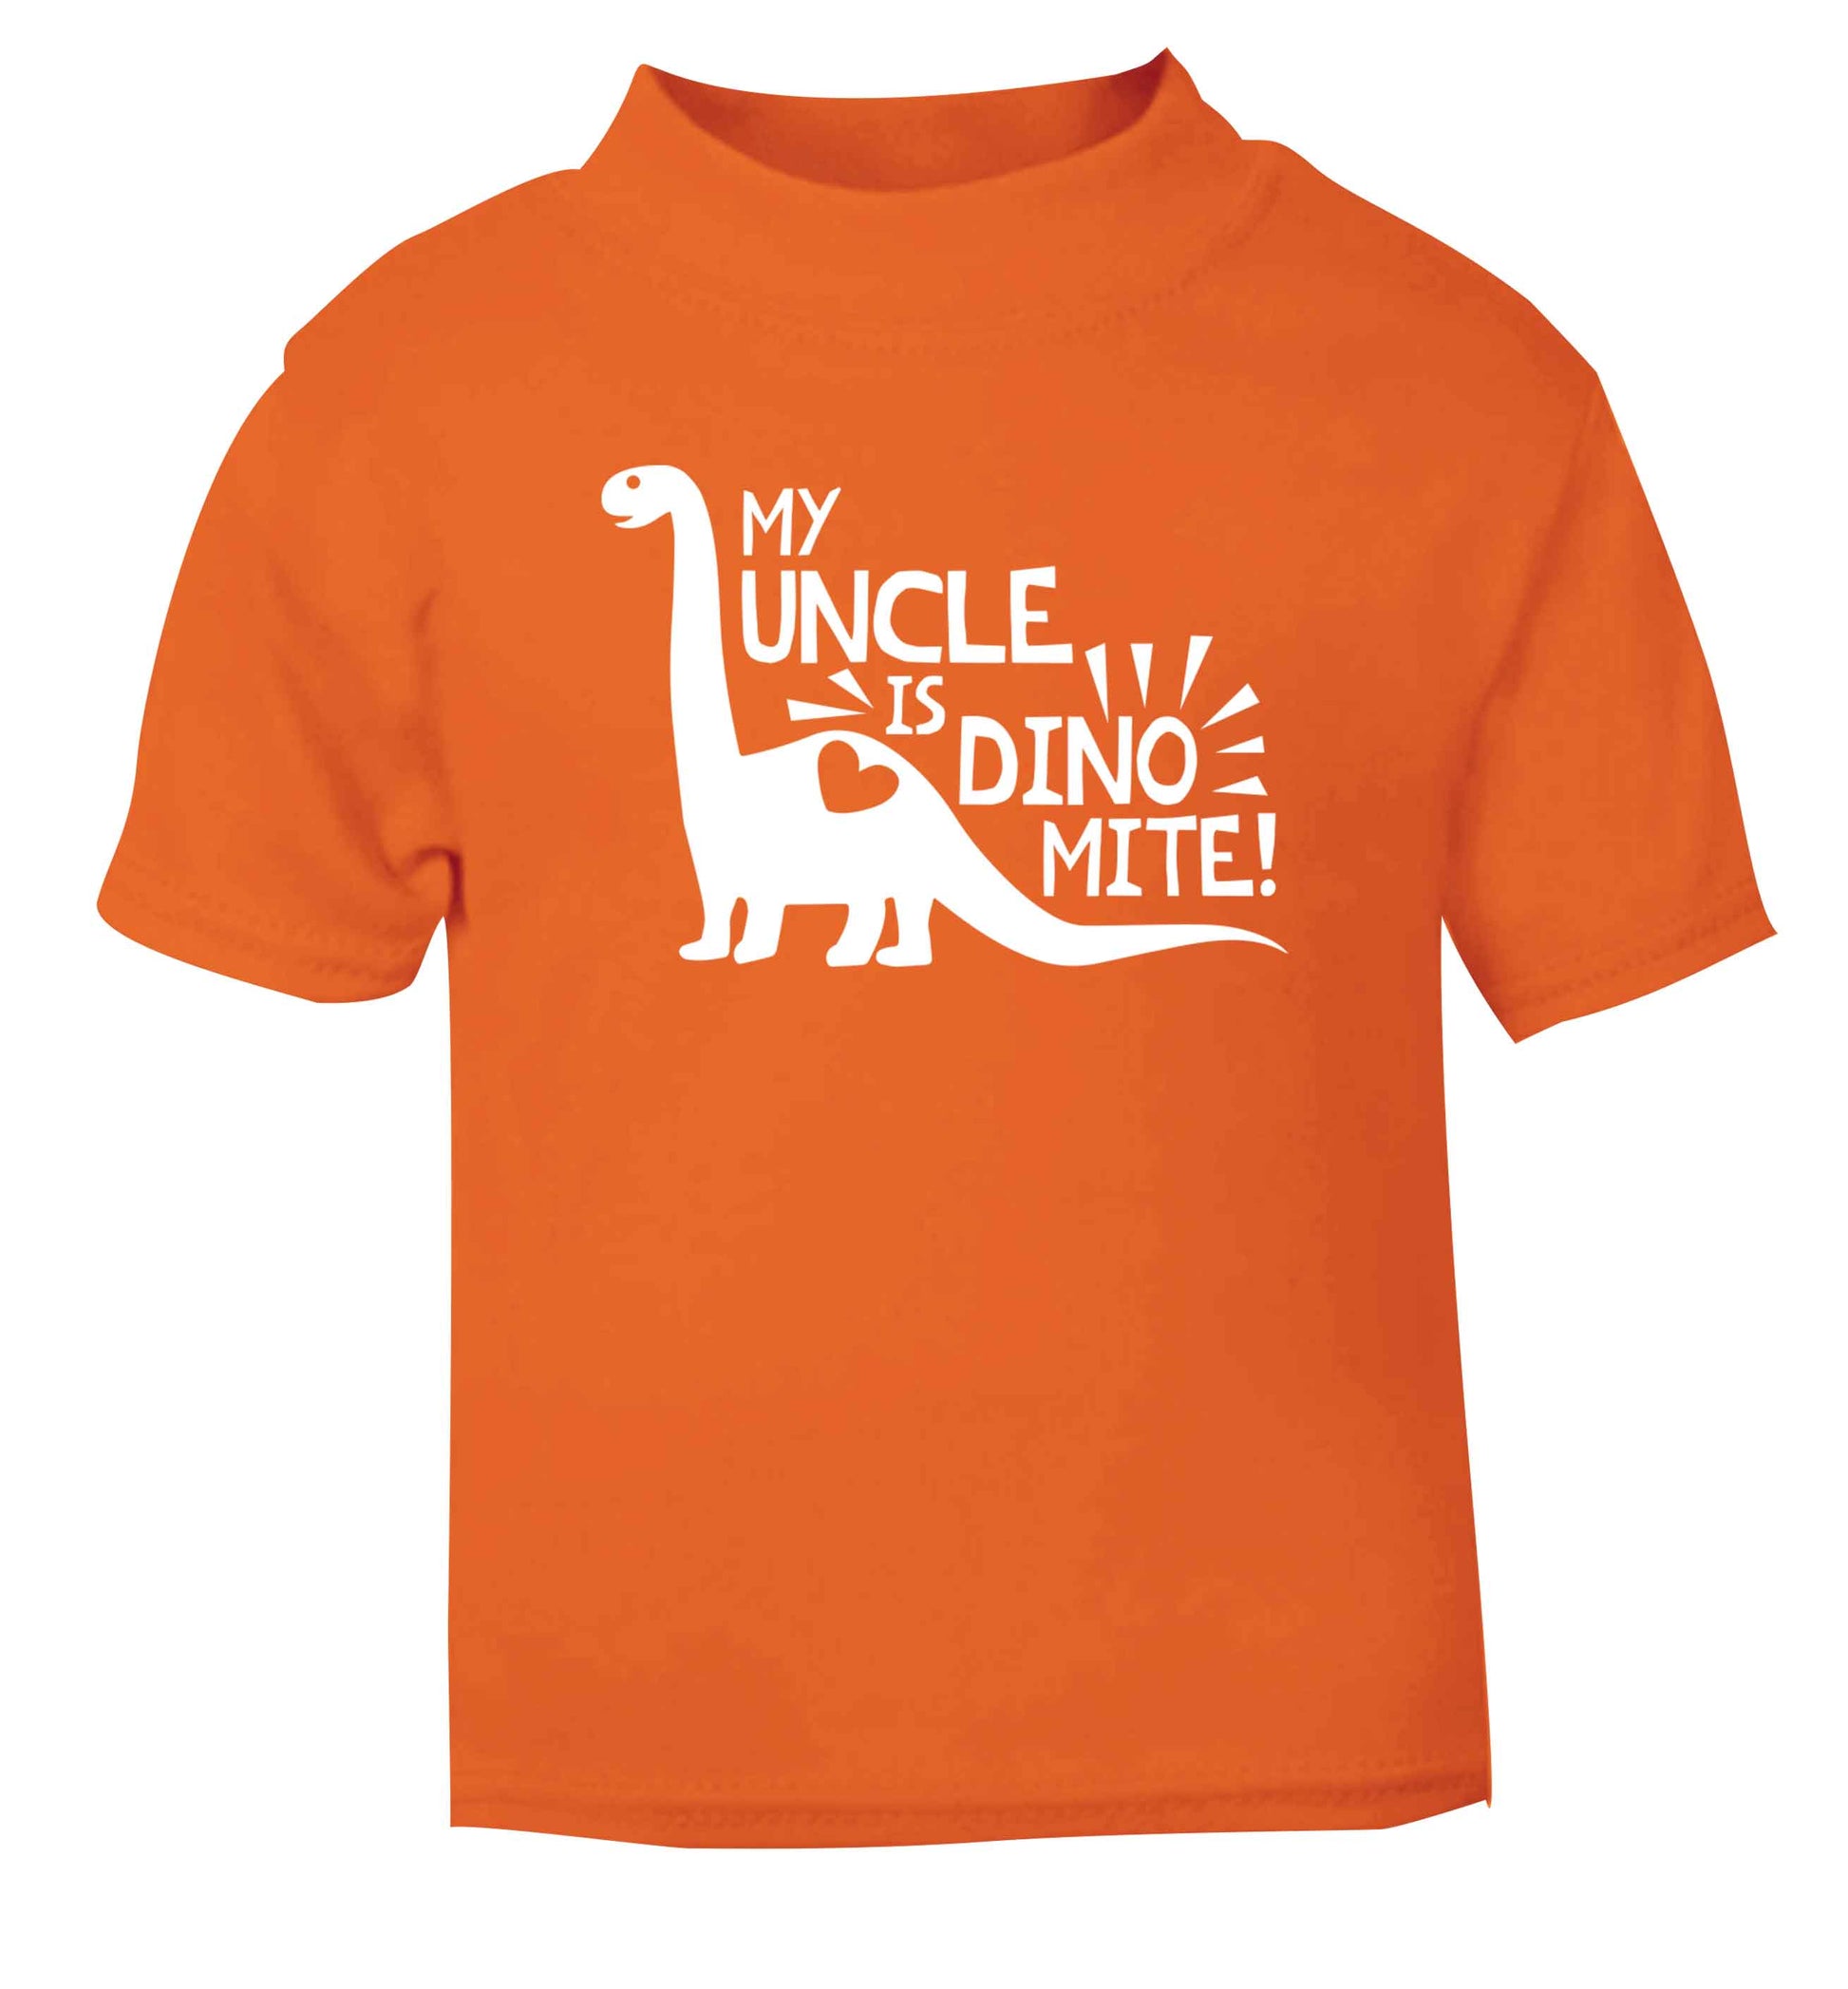 My uncle is dinomite! orange Baby Toddler Tshirt 2 Years